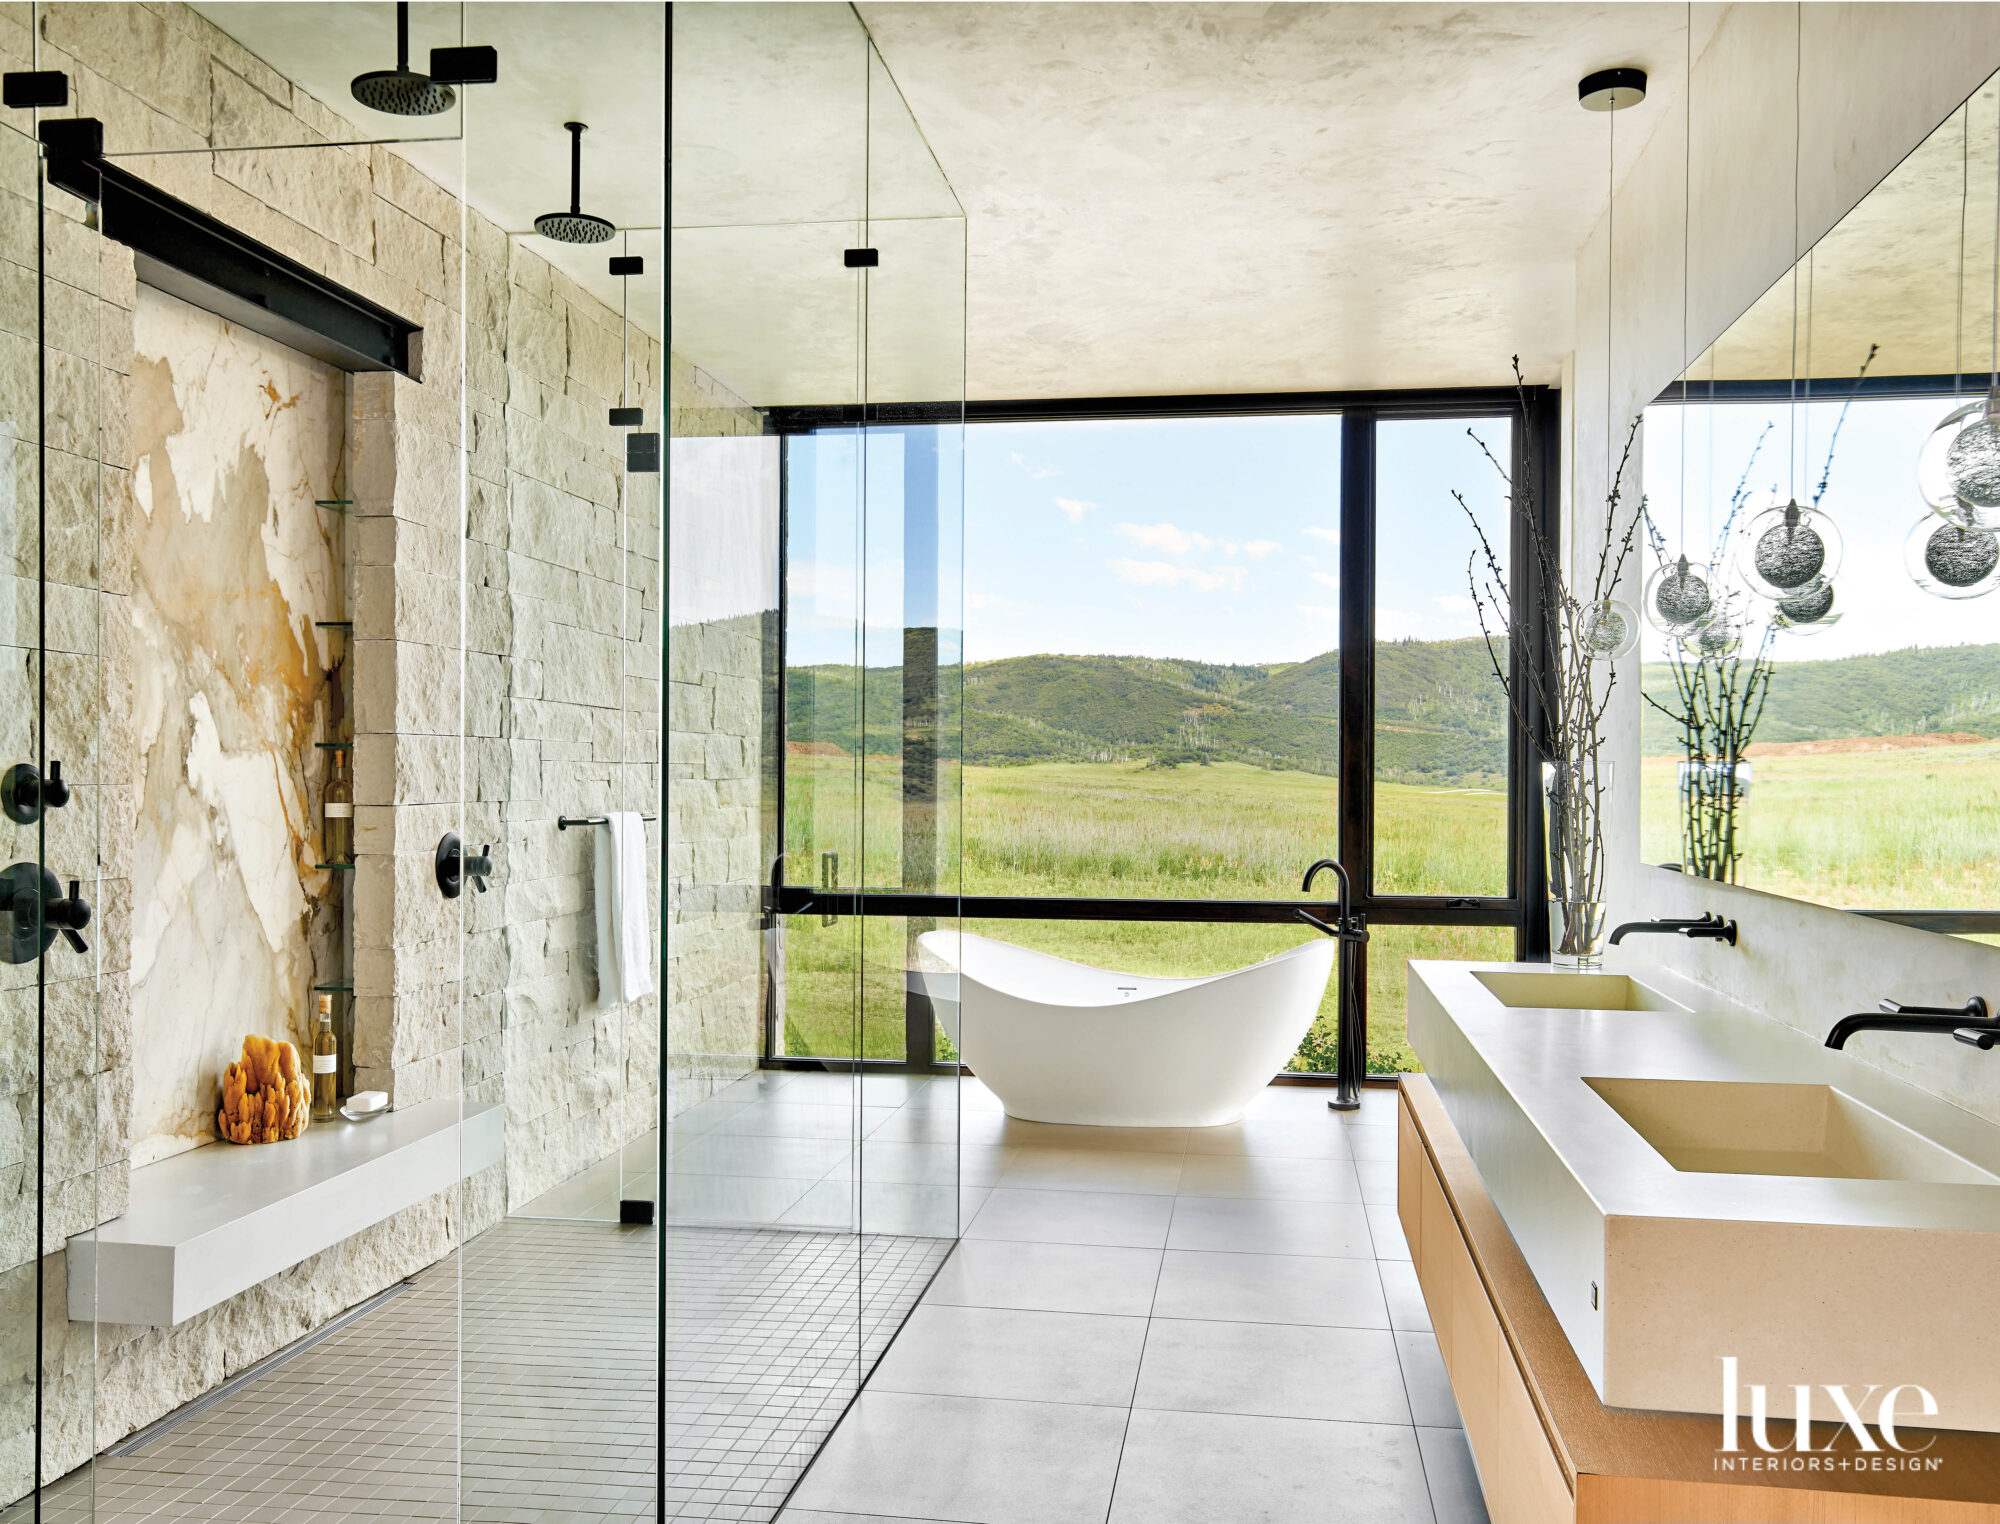 A white tub sits between stone walls in the spacious main bath.